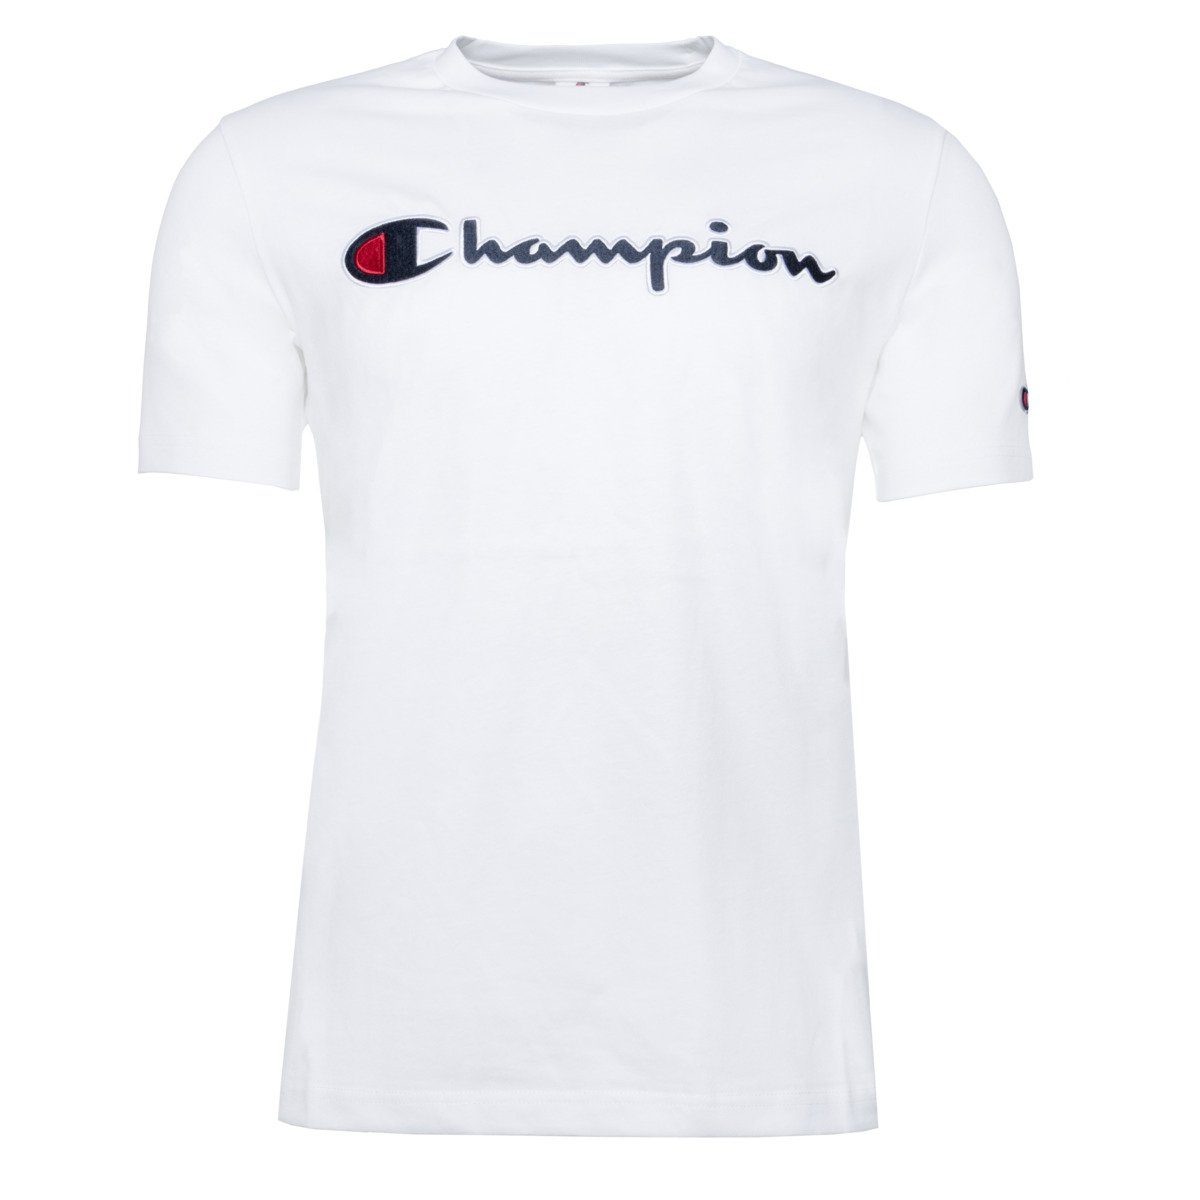 Champion weiss T-Shirt Herren Crewneck